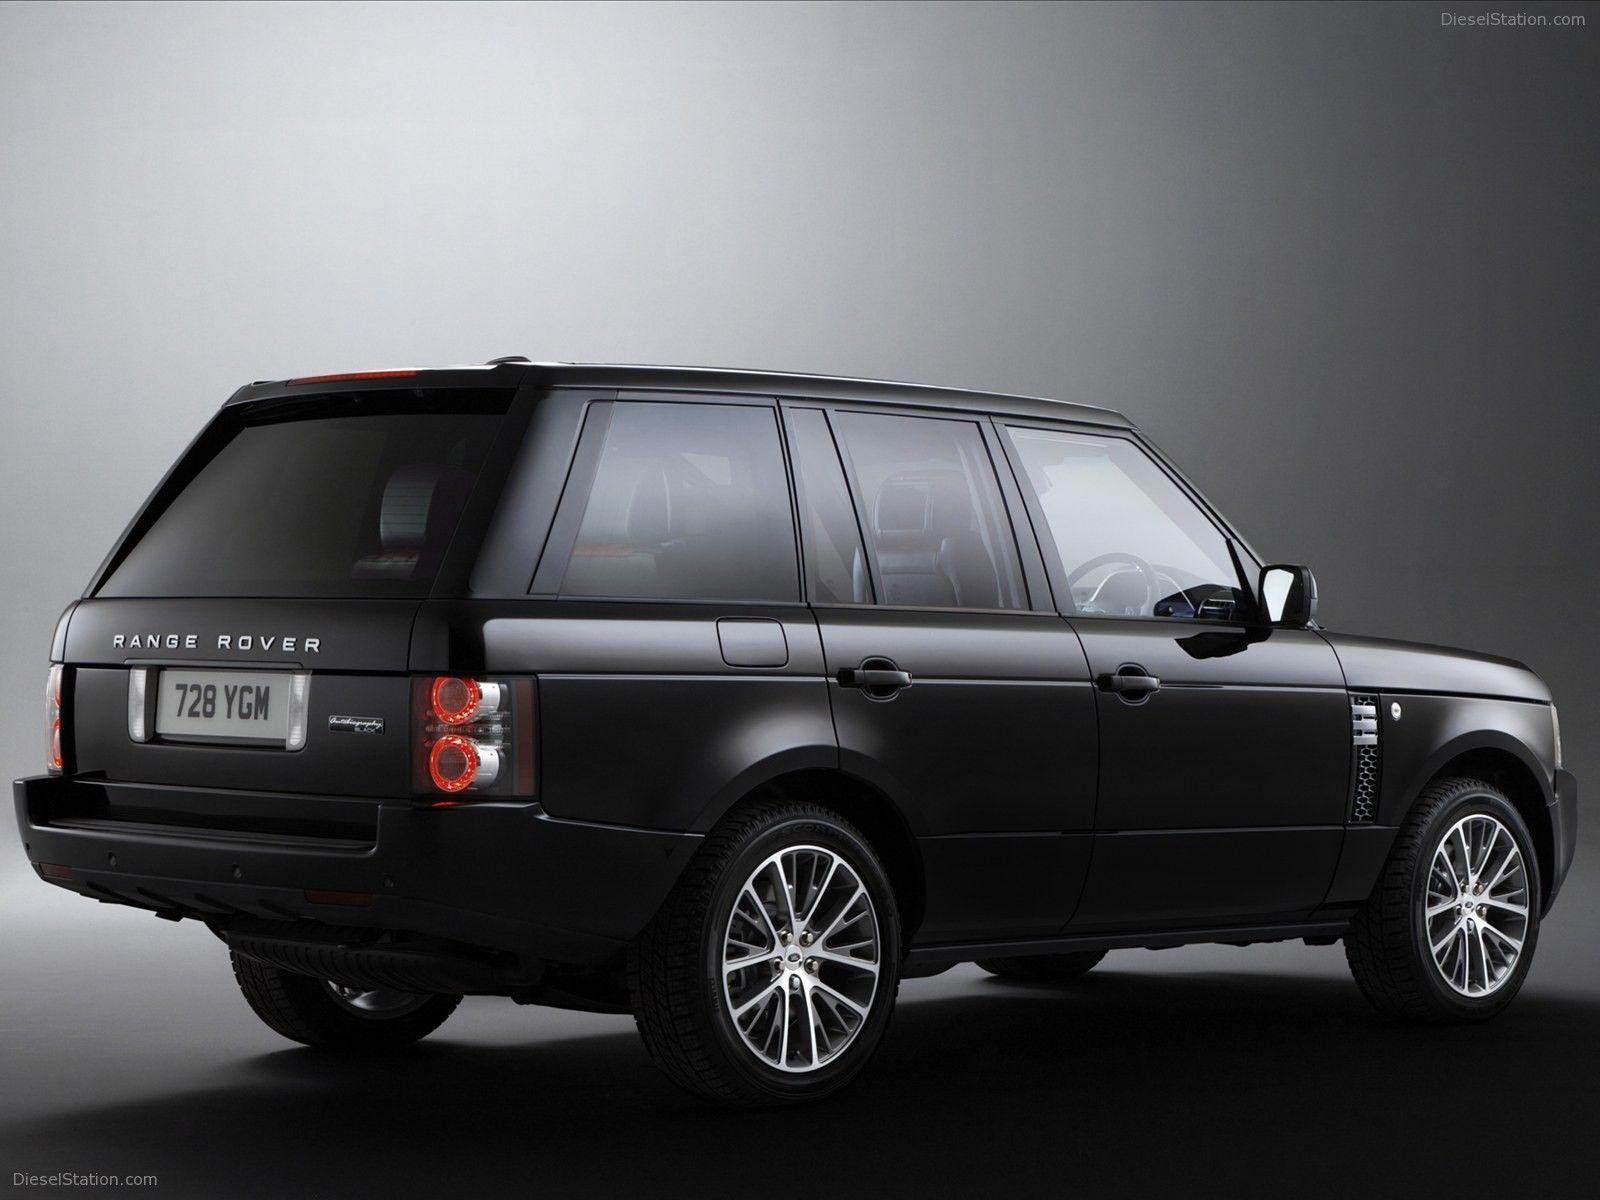 Black Range Rover Wallpapers - Top Free Black Range Rover ...